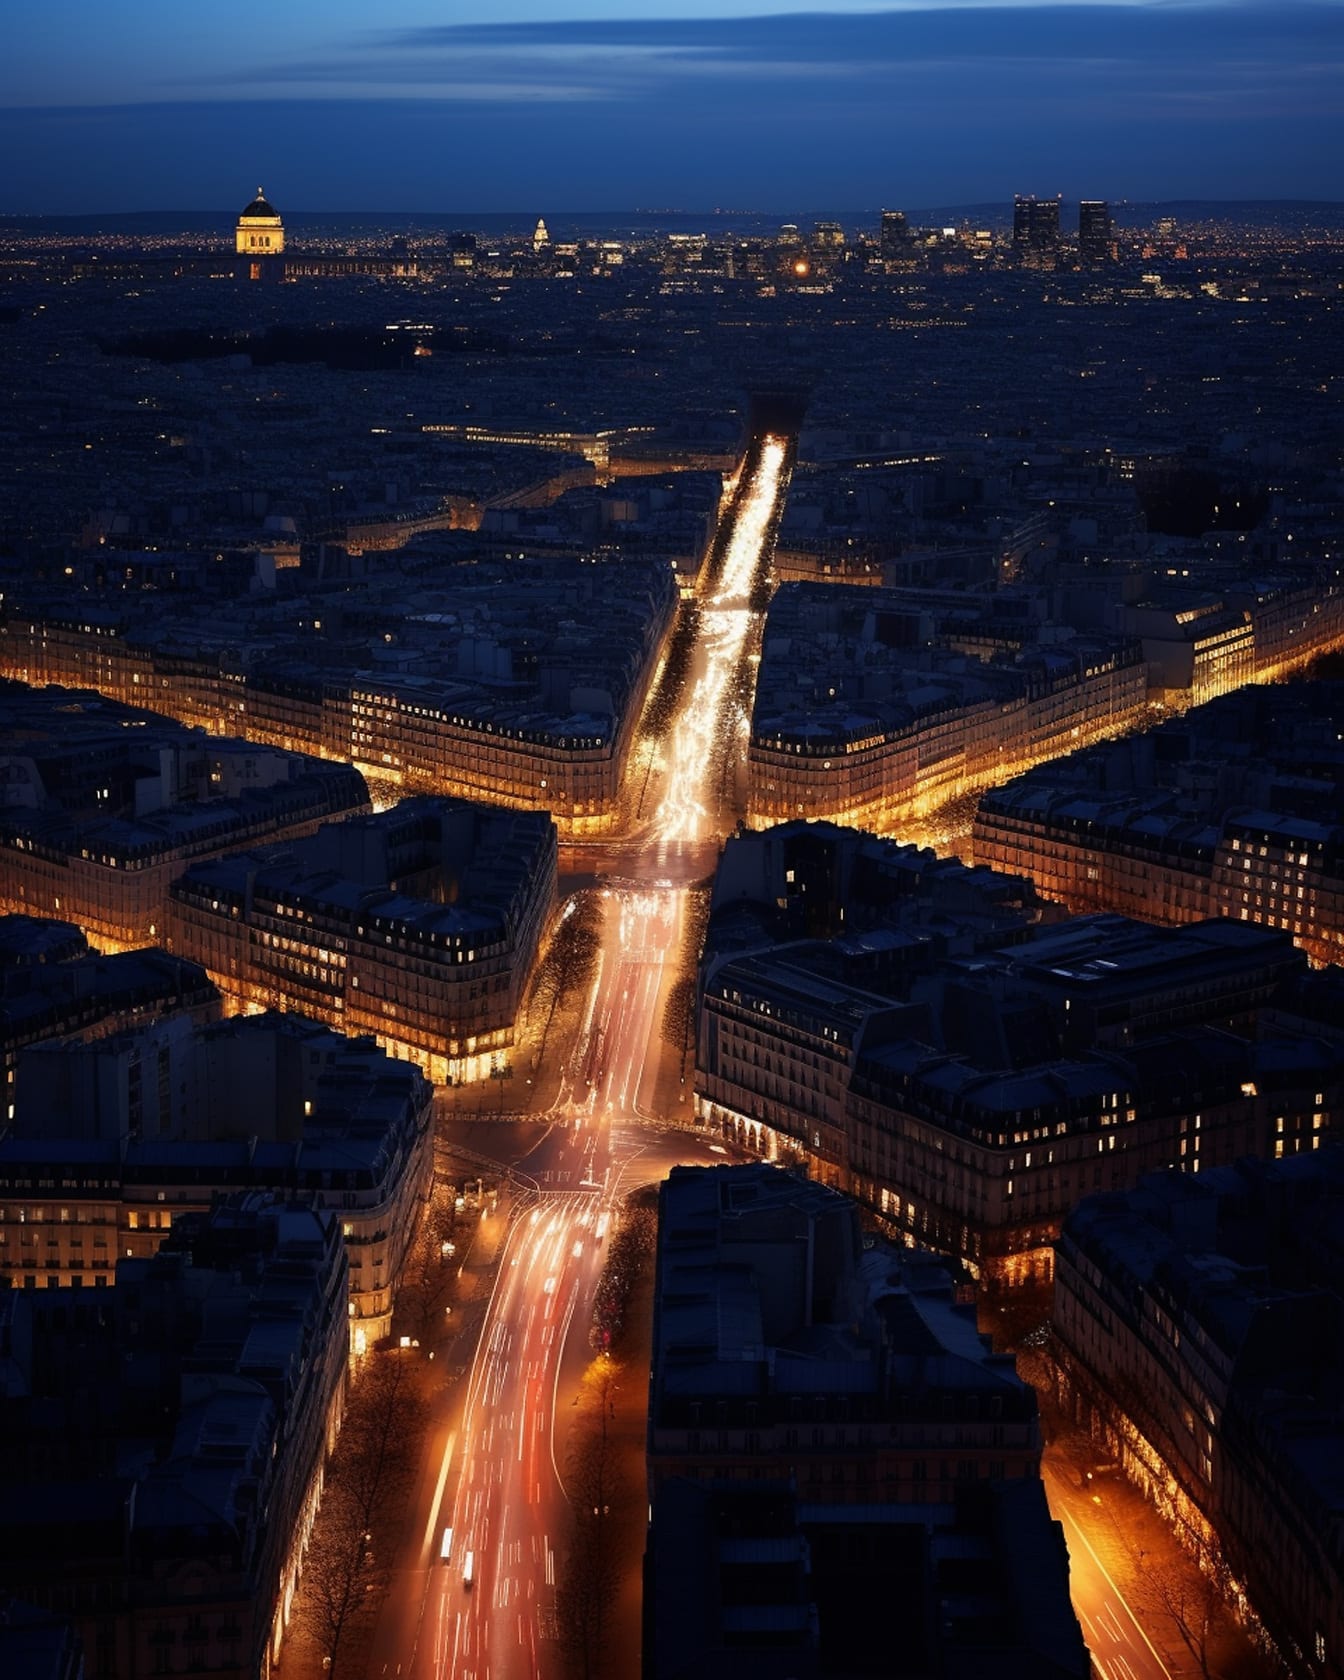 Ilustrasi pemandangan kota udara malam persimpangan jalan